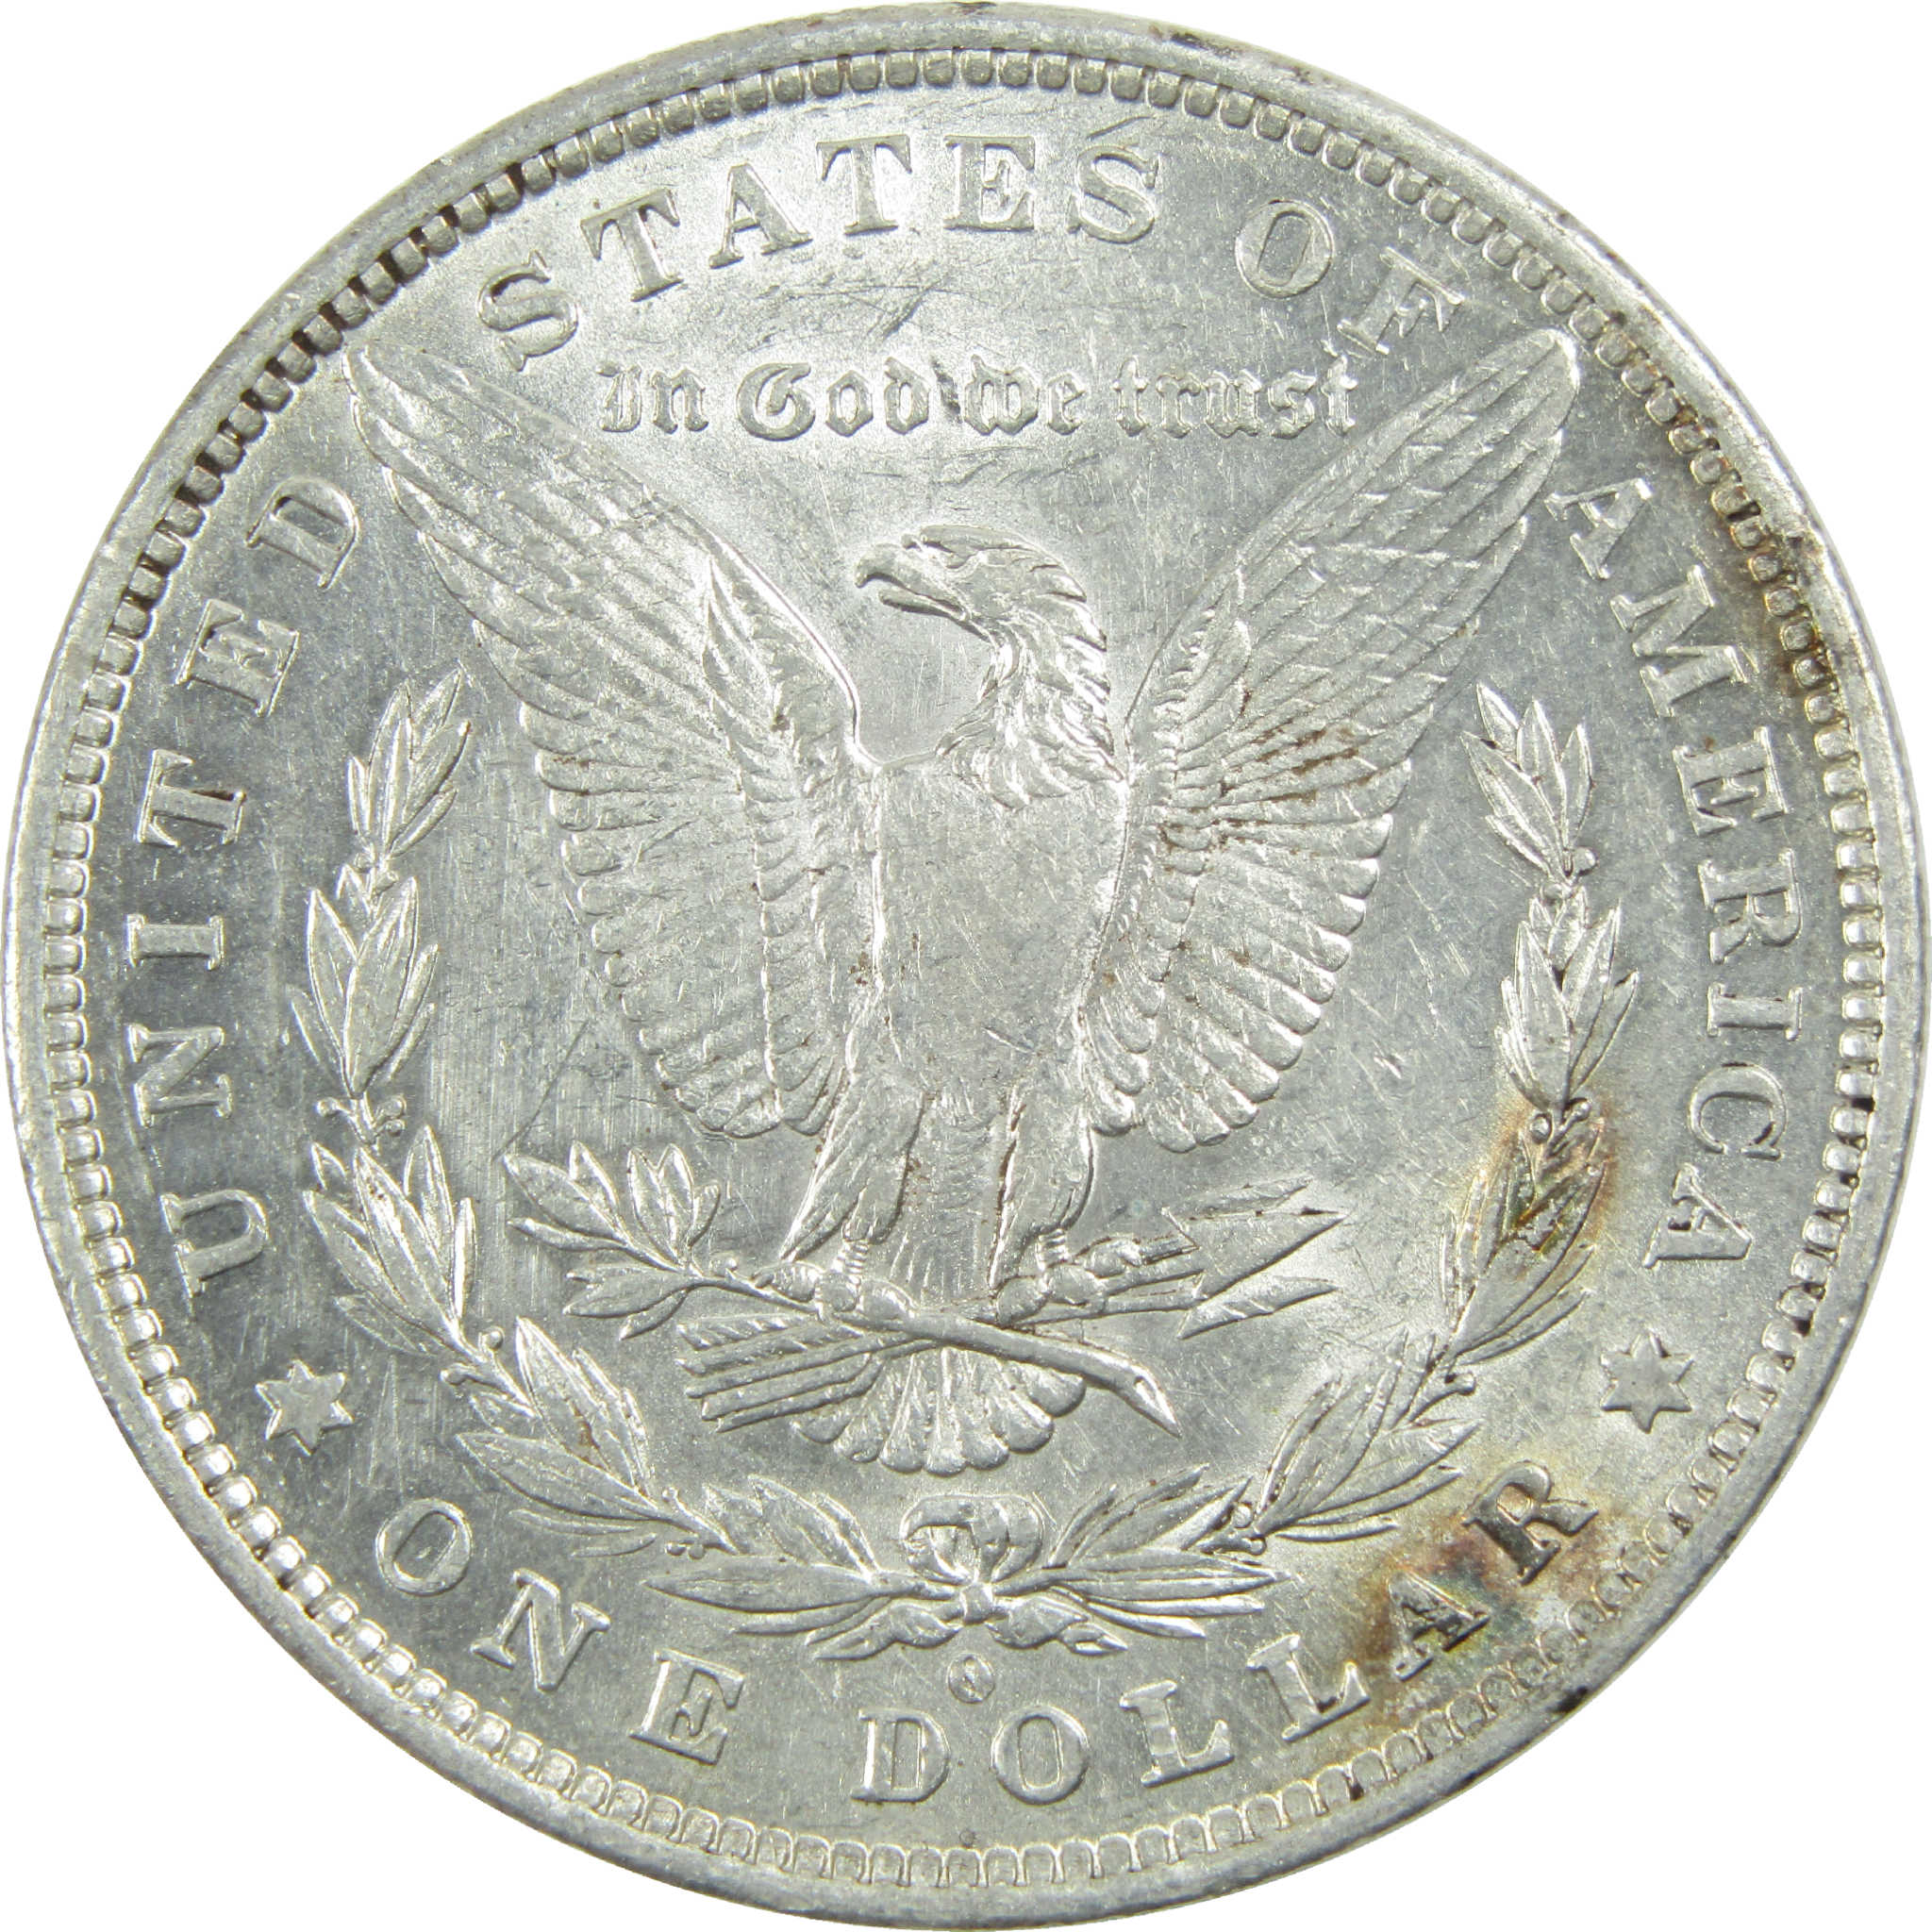 1882 O/S Morgan Dollar AU About Uncirculated Silver $1 Coin SKU:I13591 - Morgan coin - Morgan silver dollar - Morgan silver dollar for sale - Profile Coins &amp; Collectibles